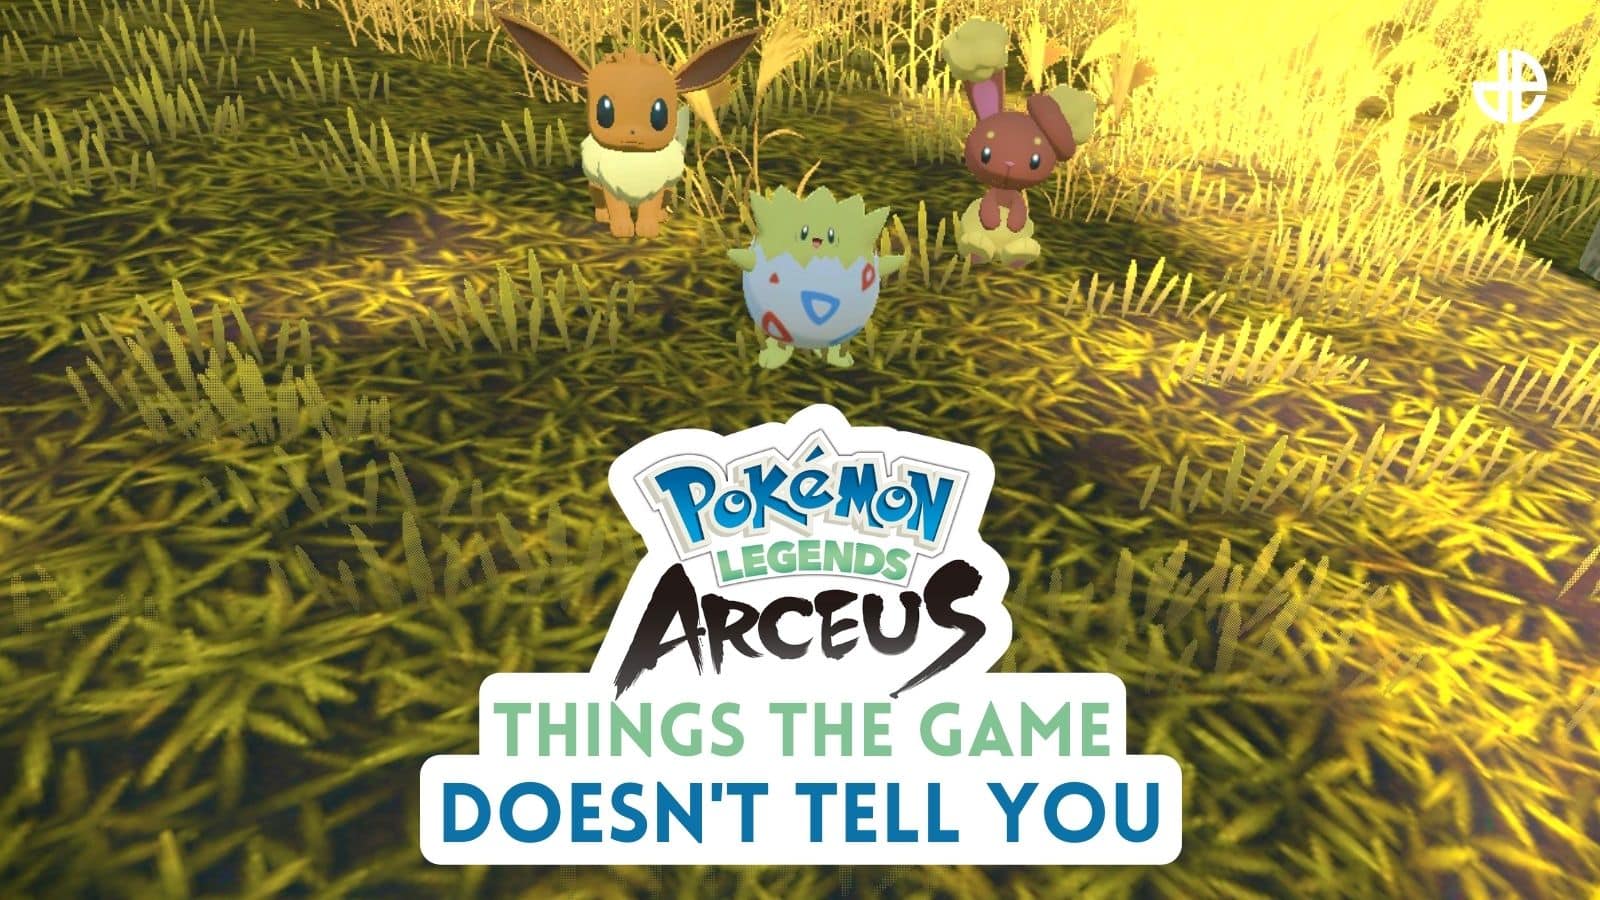 Pokemon Legends: Arceus Clip Shows Spiritomb's Terrible Aim